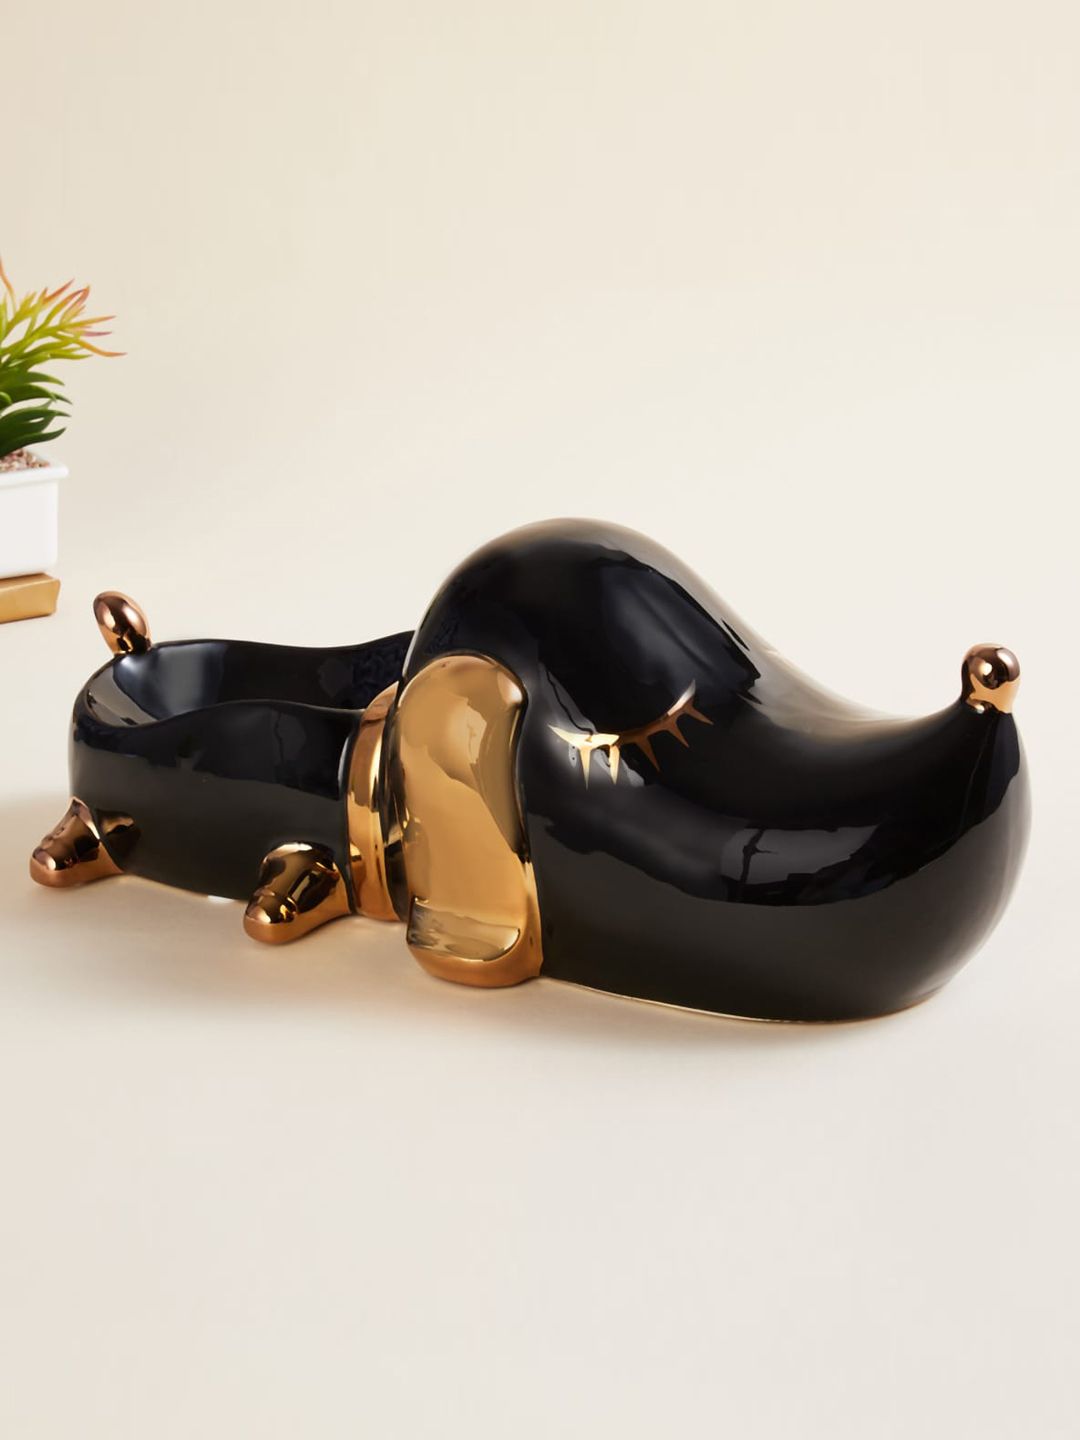 Home Centre Splendid Black and Gold Solid Ceramic Bulldog Figurine Price in India